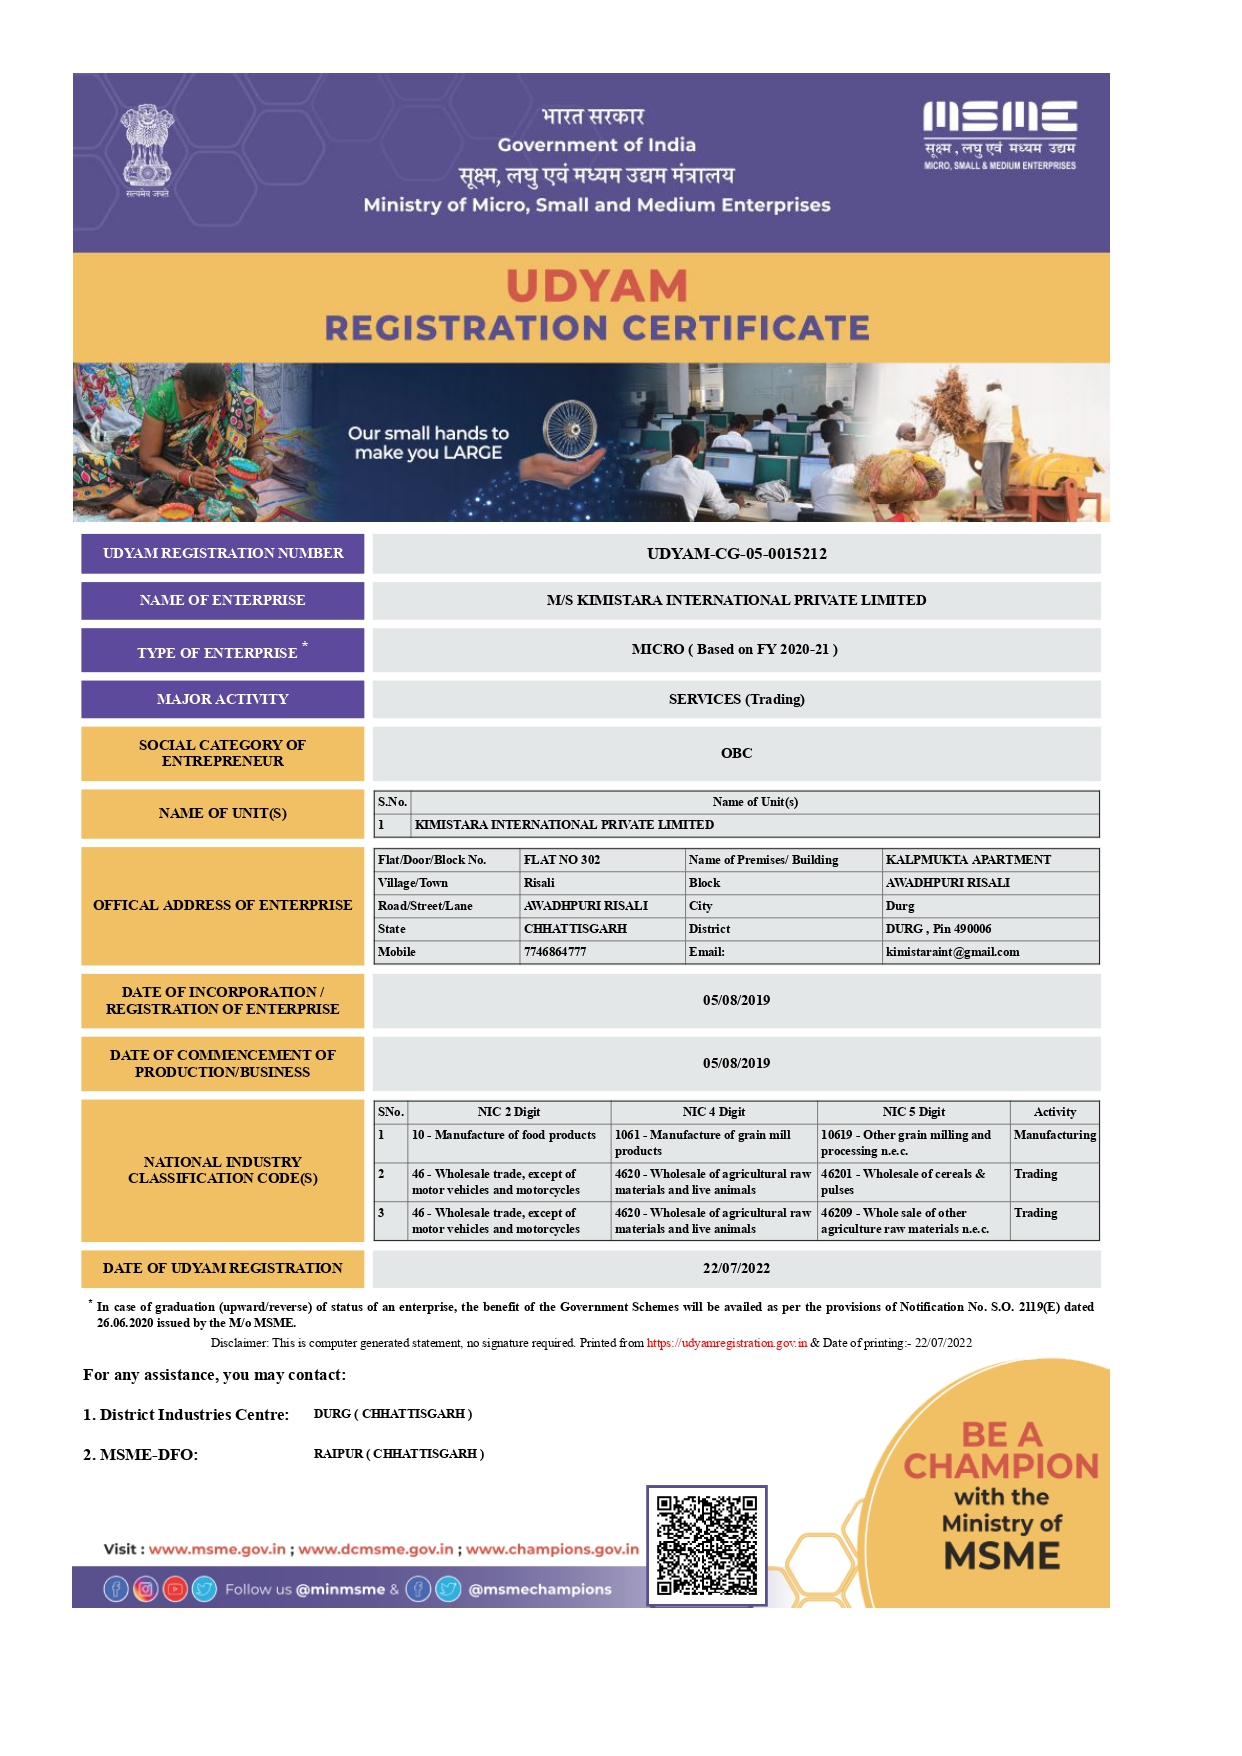 kimistara quality assurance certificate (2)